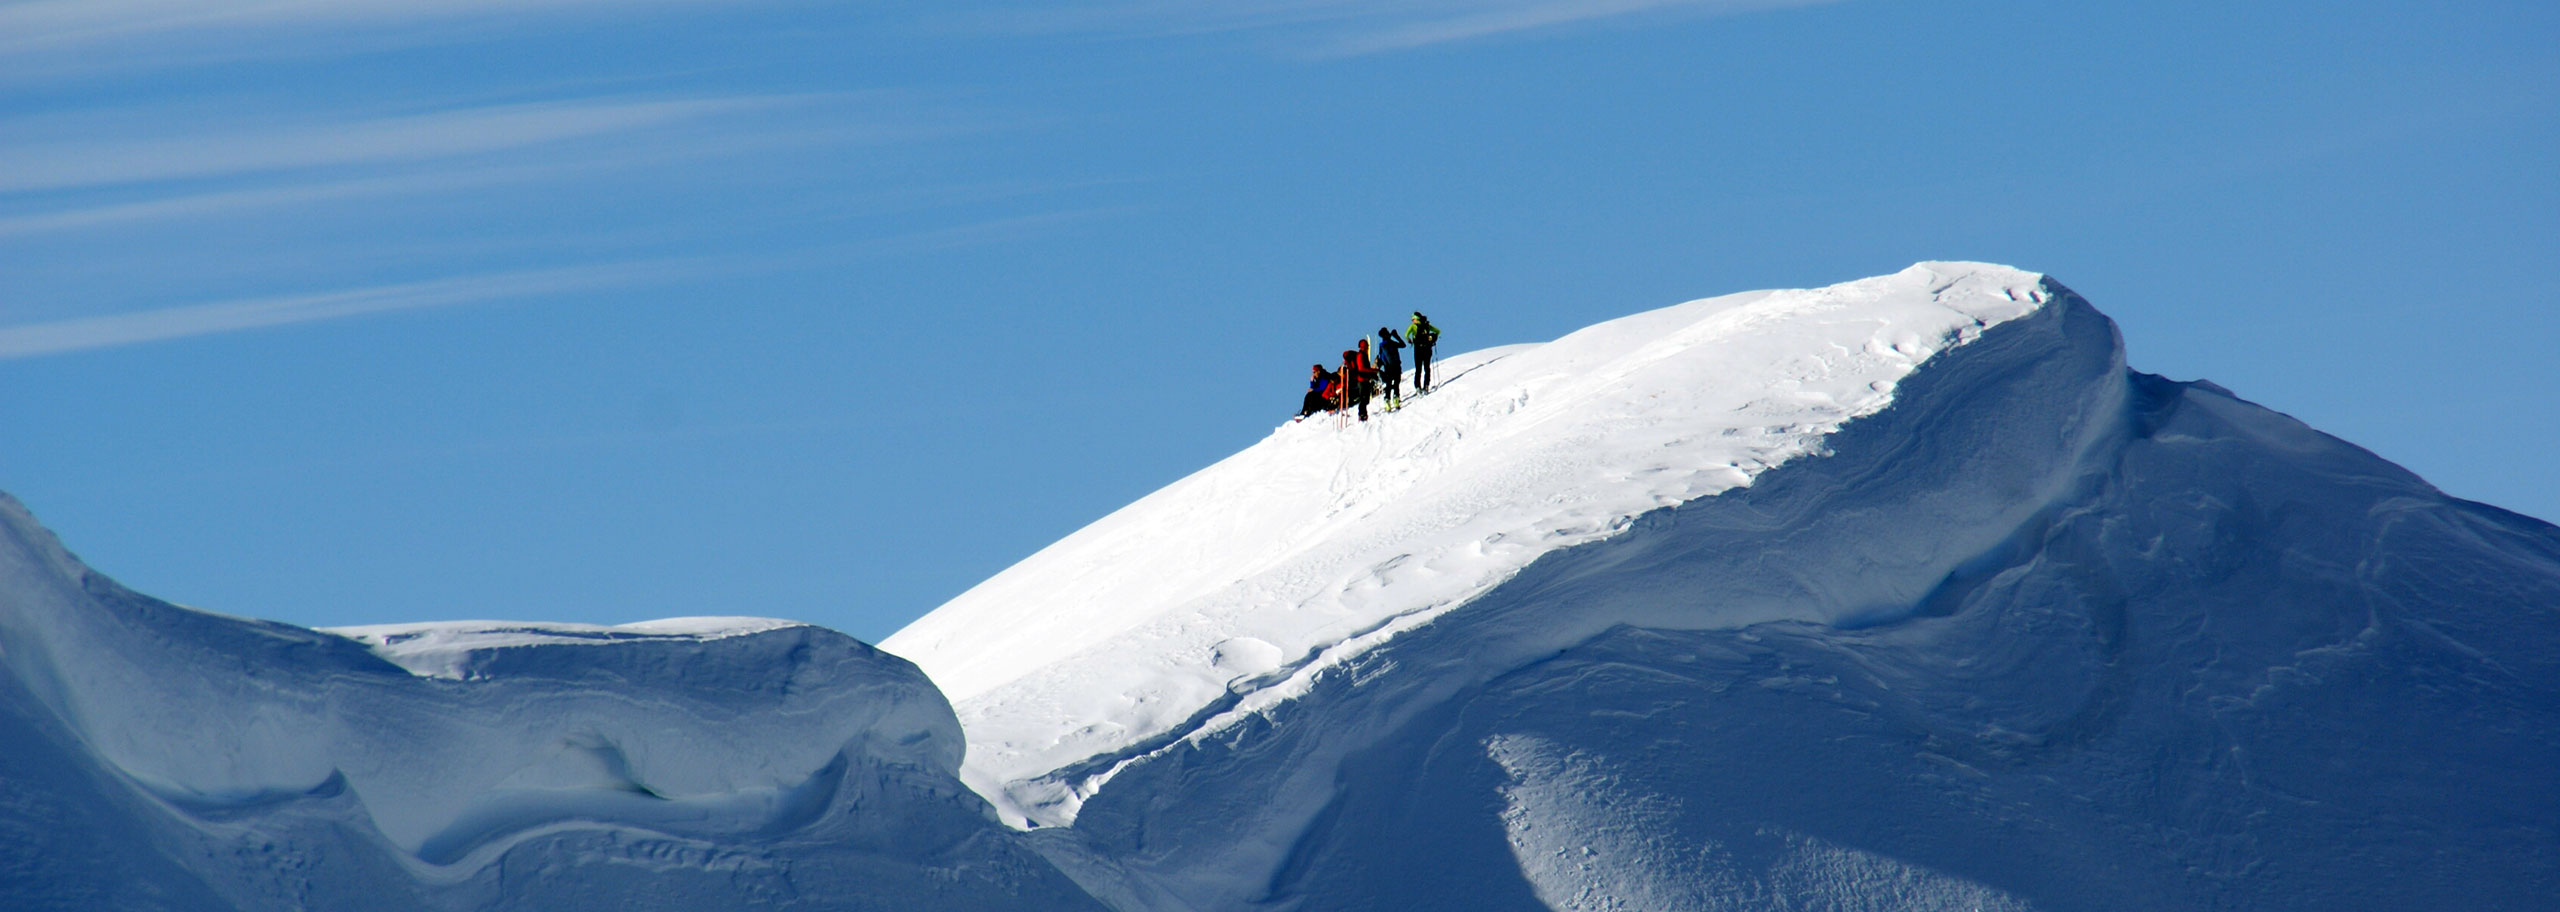 Ski Mountaineering with a Mountain Guide in the Alpe di Siusi